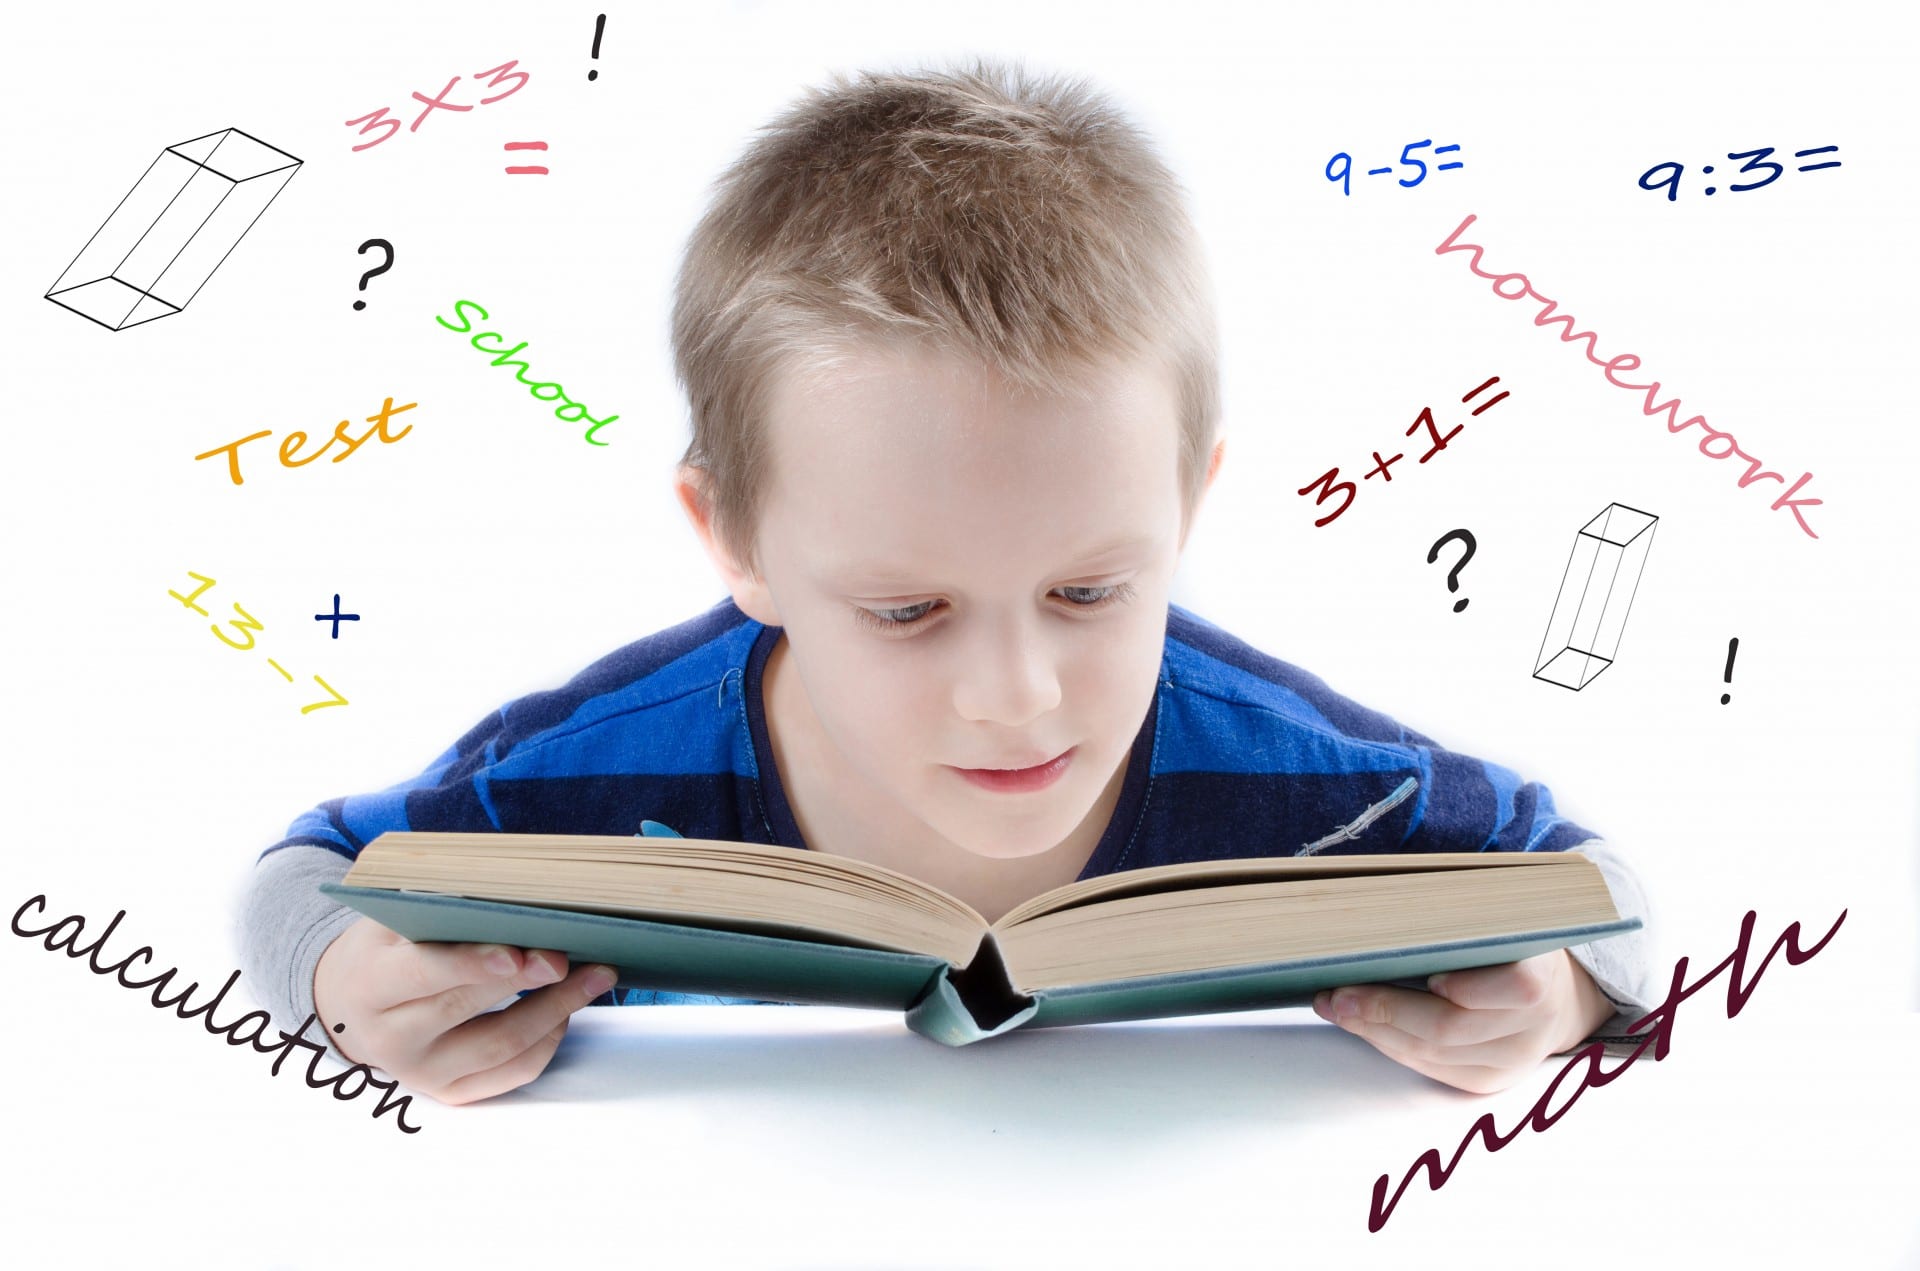 Developmental process of boy looking at school book